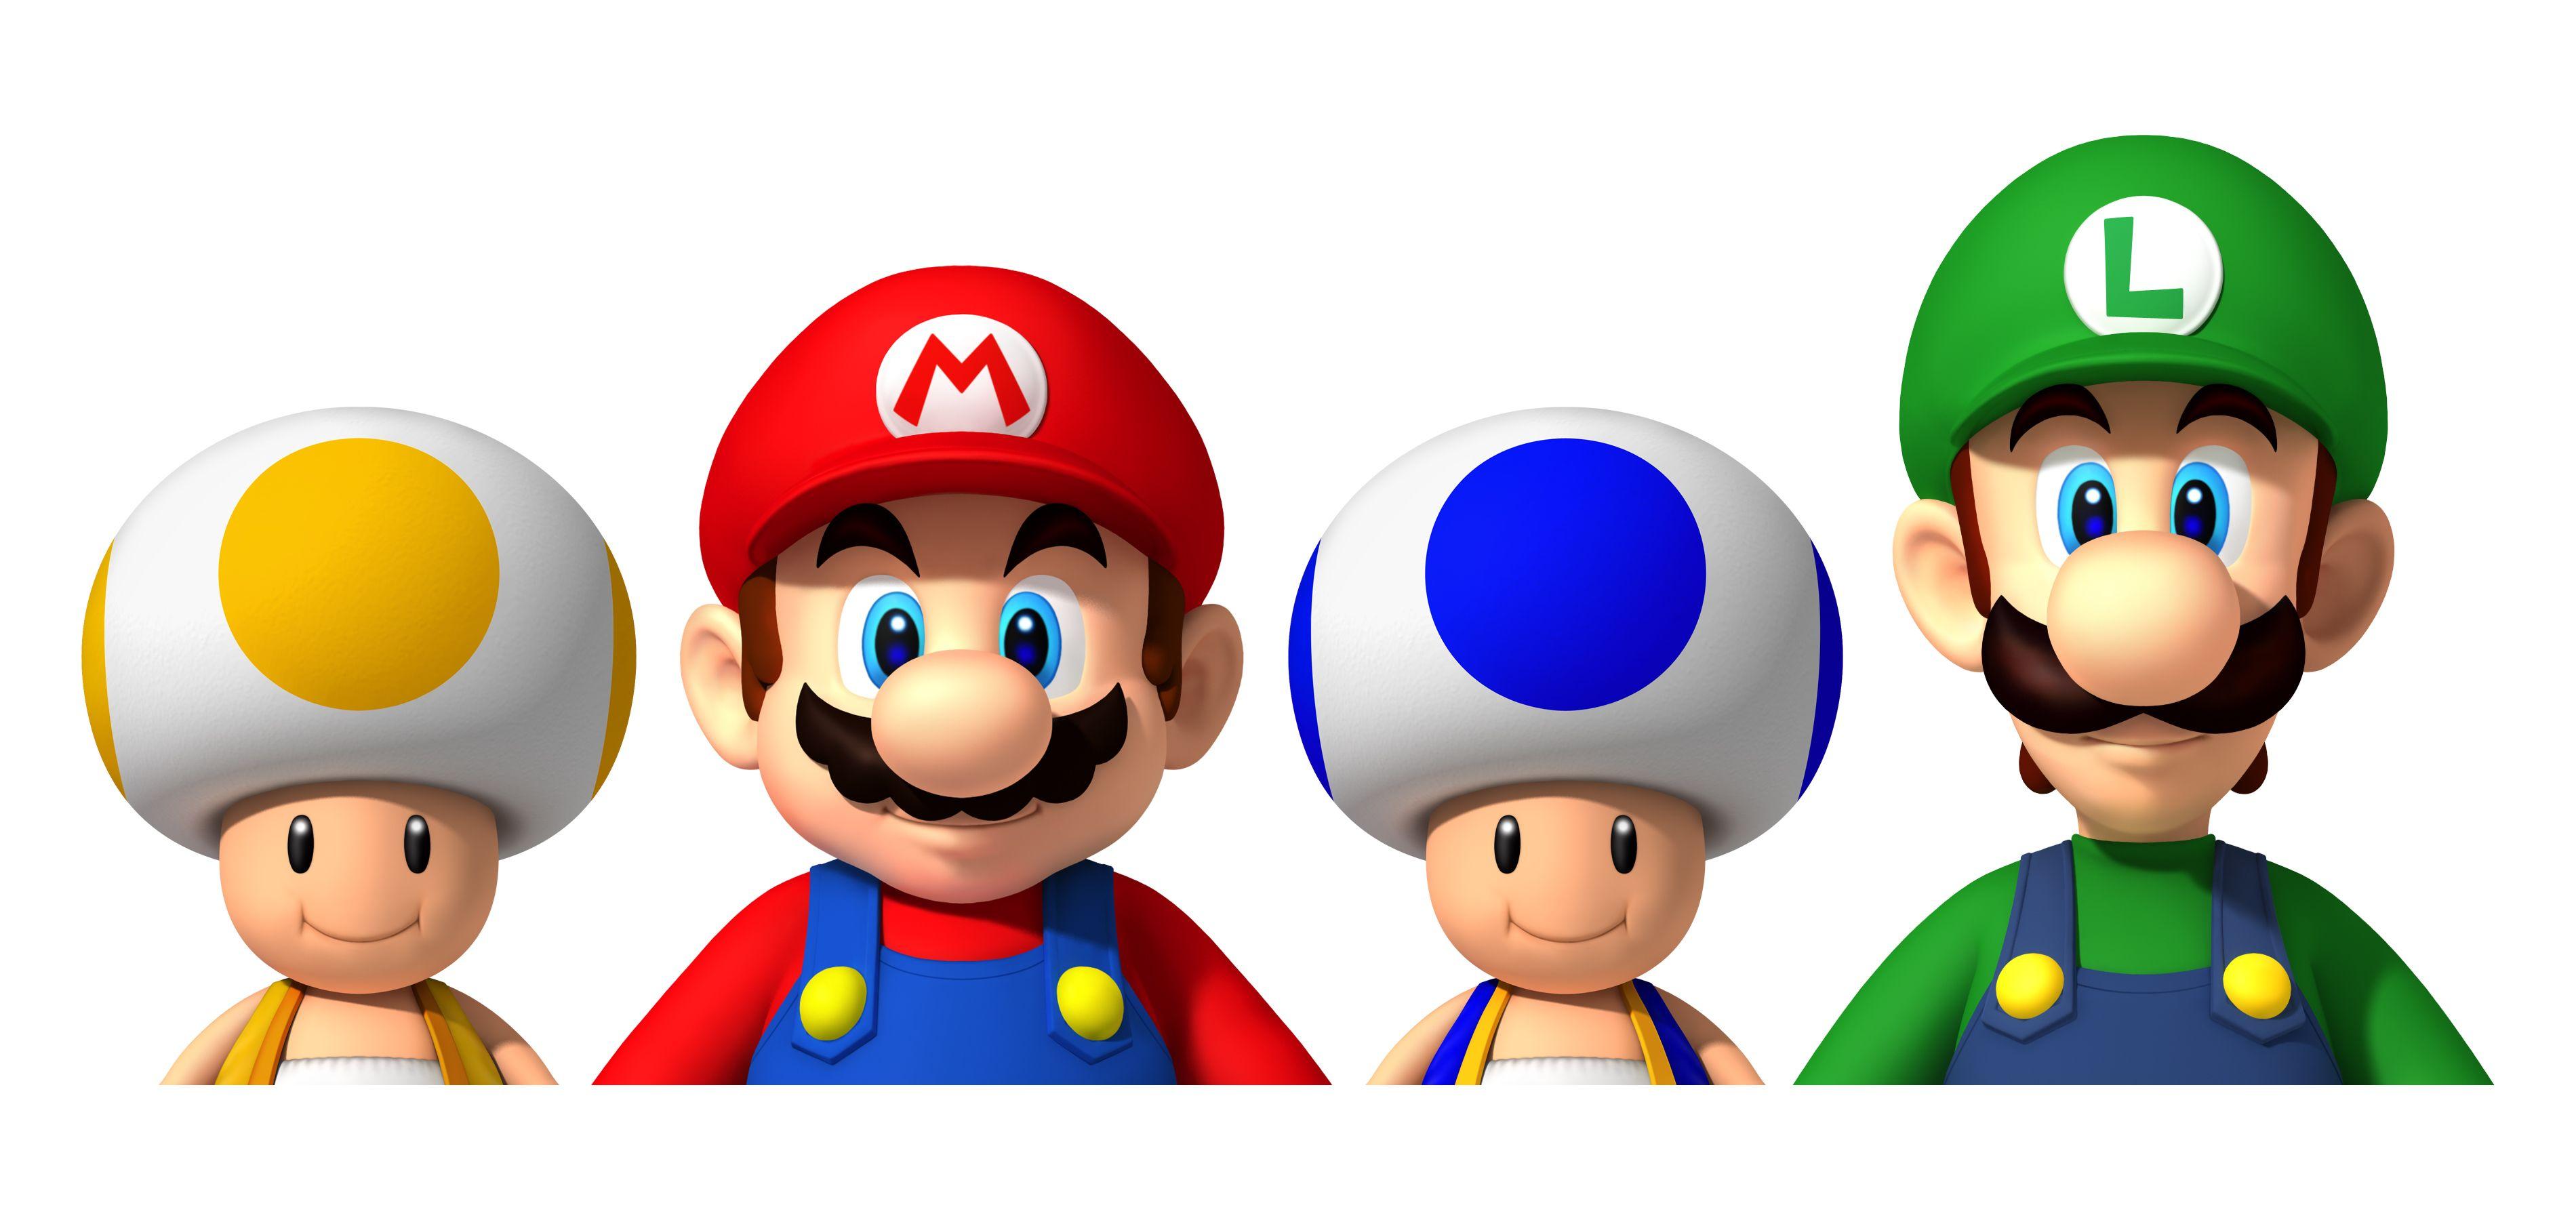 Yellow Toad, Mario, Blue Toad and Luigi. Super Mario World. Super